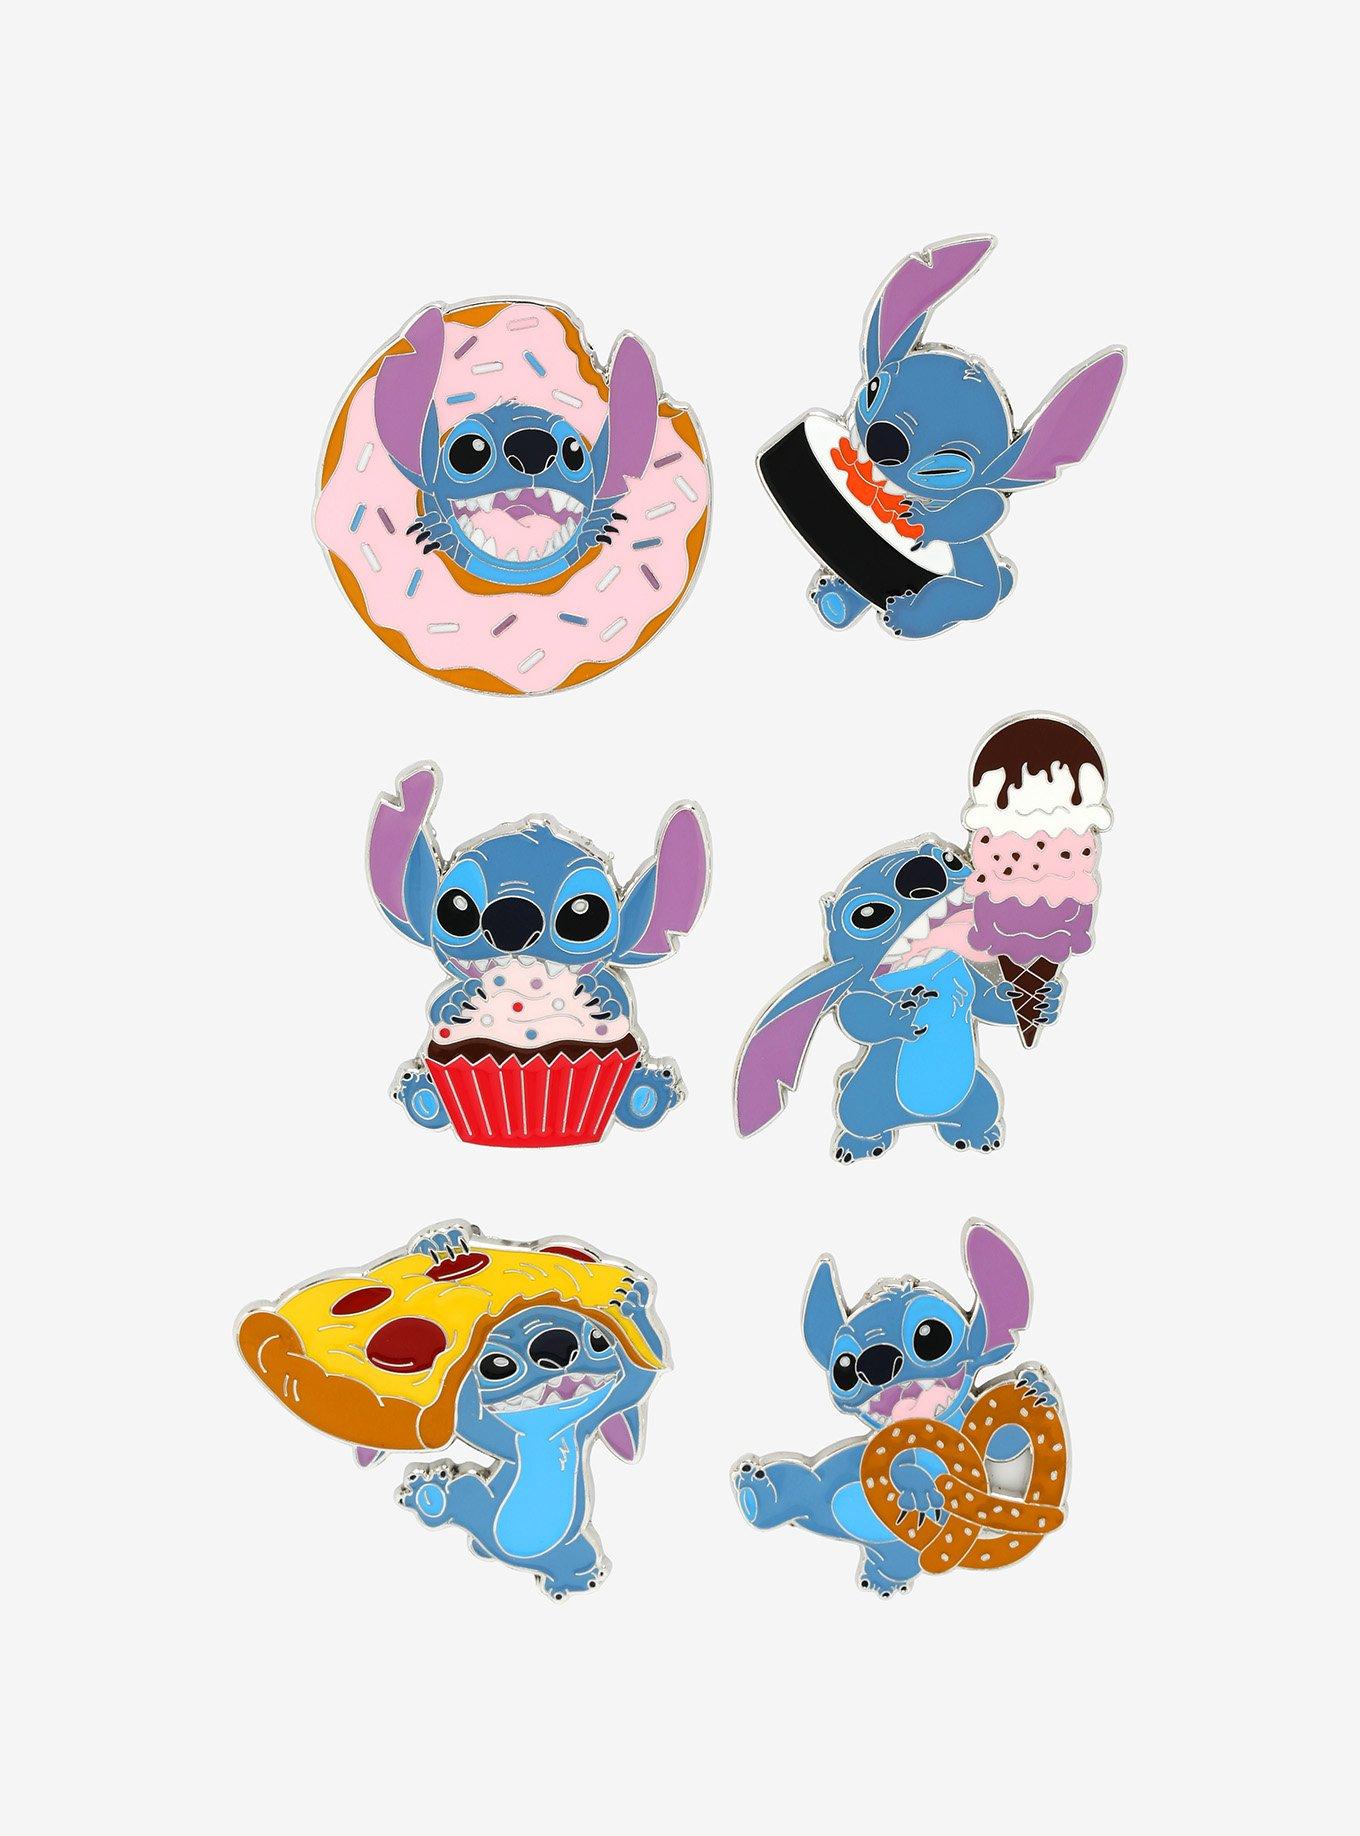 Disney Stitch enamel pin